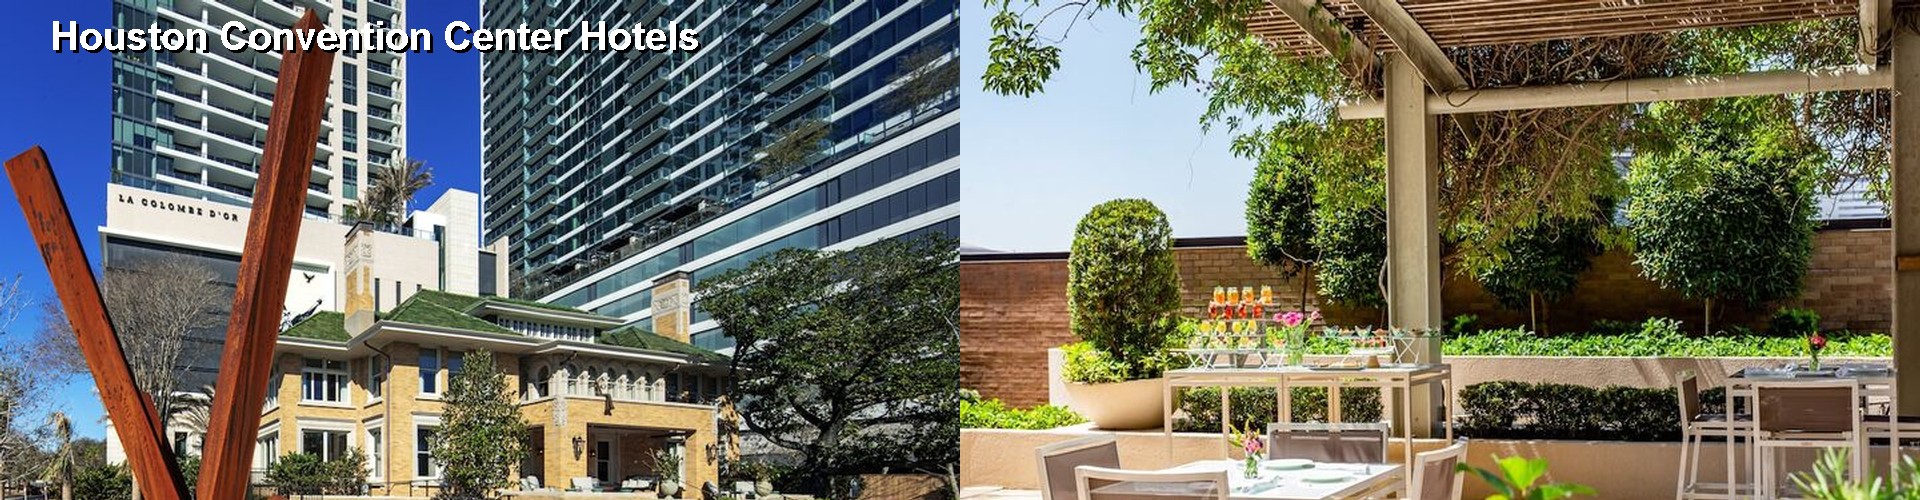 5 Best Hotels near Houston Convention Center